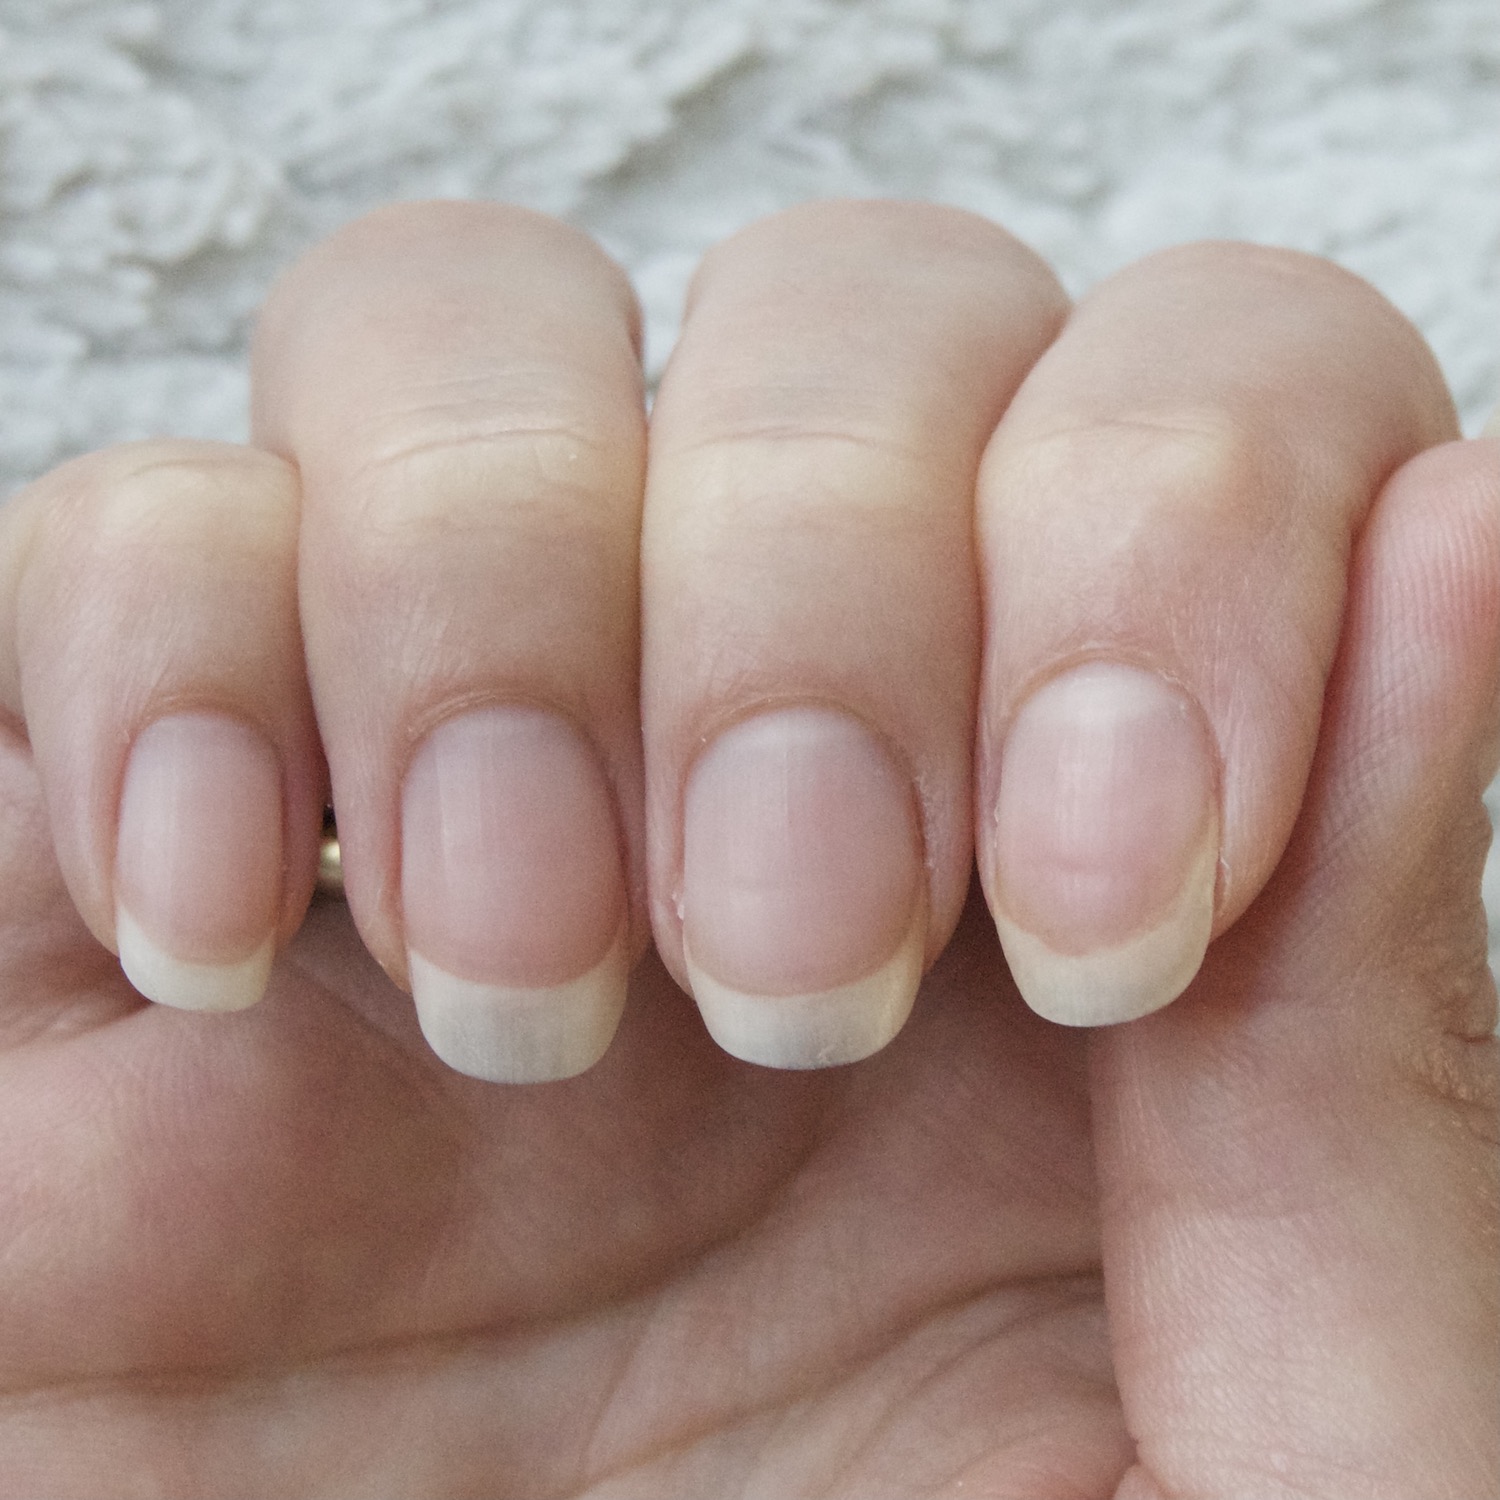 Mavala Scientifique K+ nagelverharder review gespleten nagels